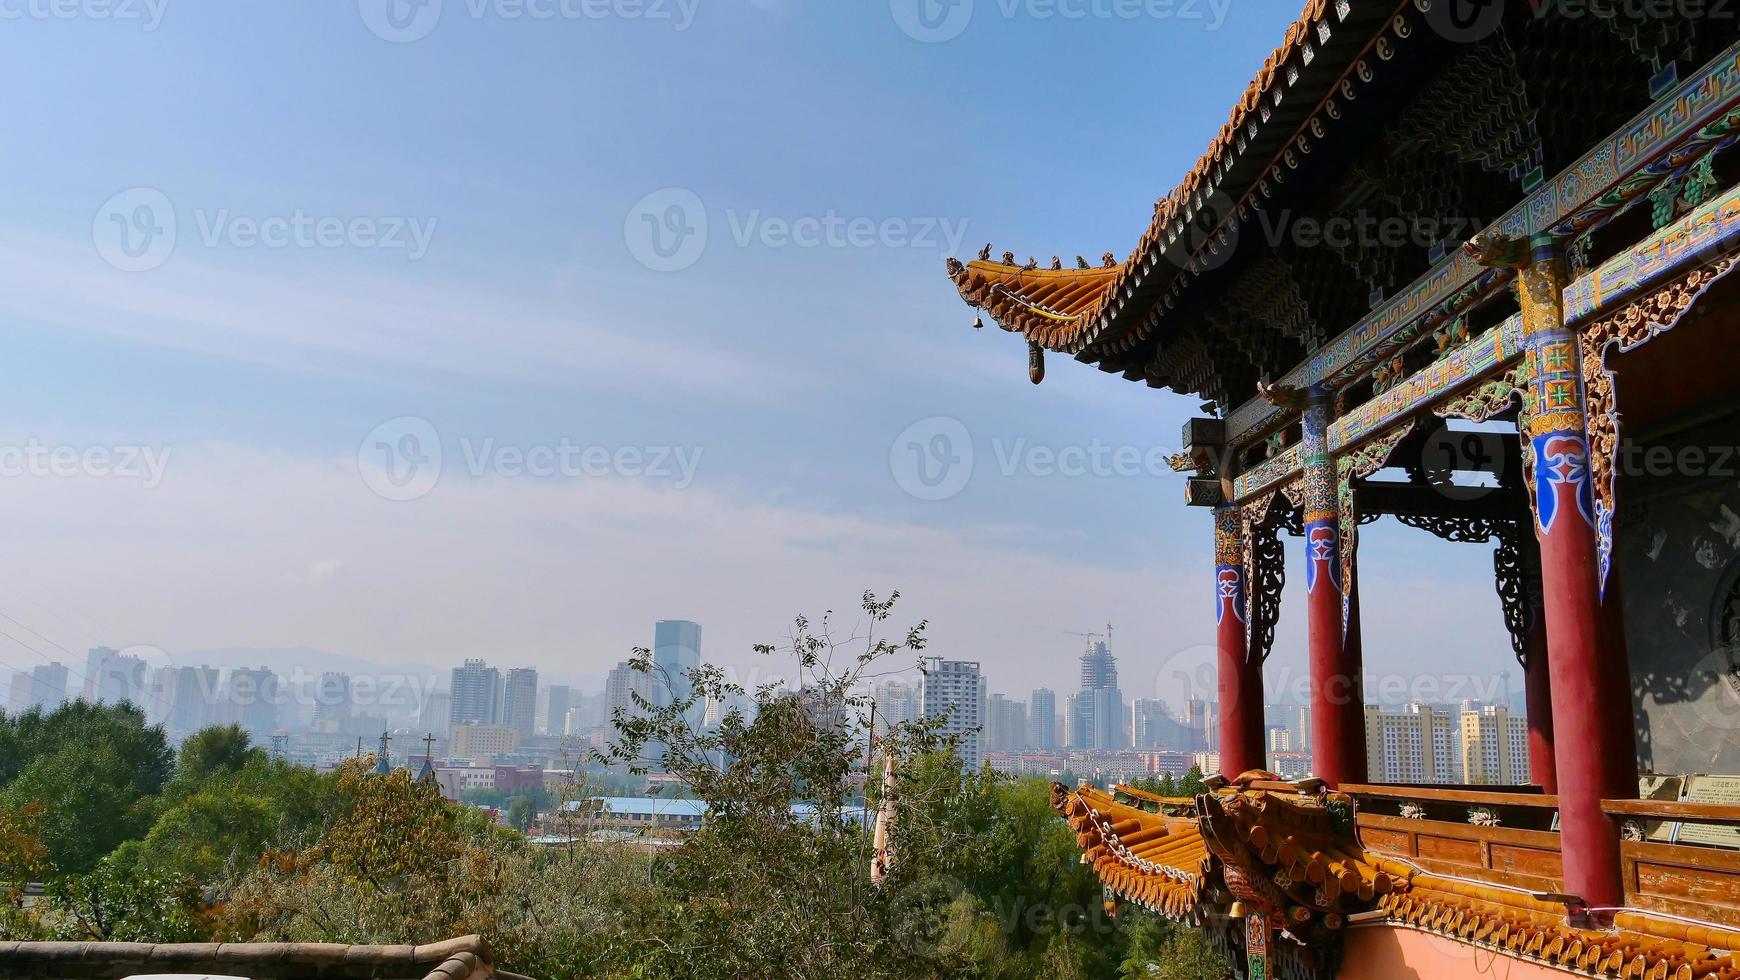 Tulou-Tempel des Beishan-Berges, Yongxing-Tempel in Xining China. foto